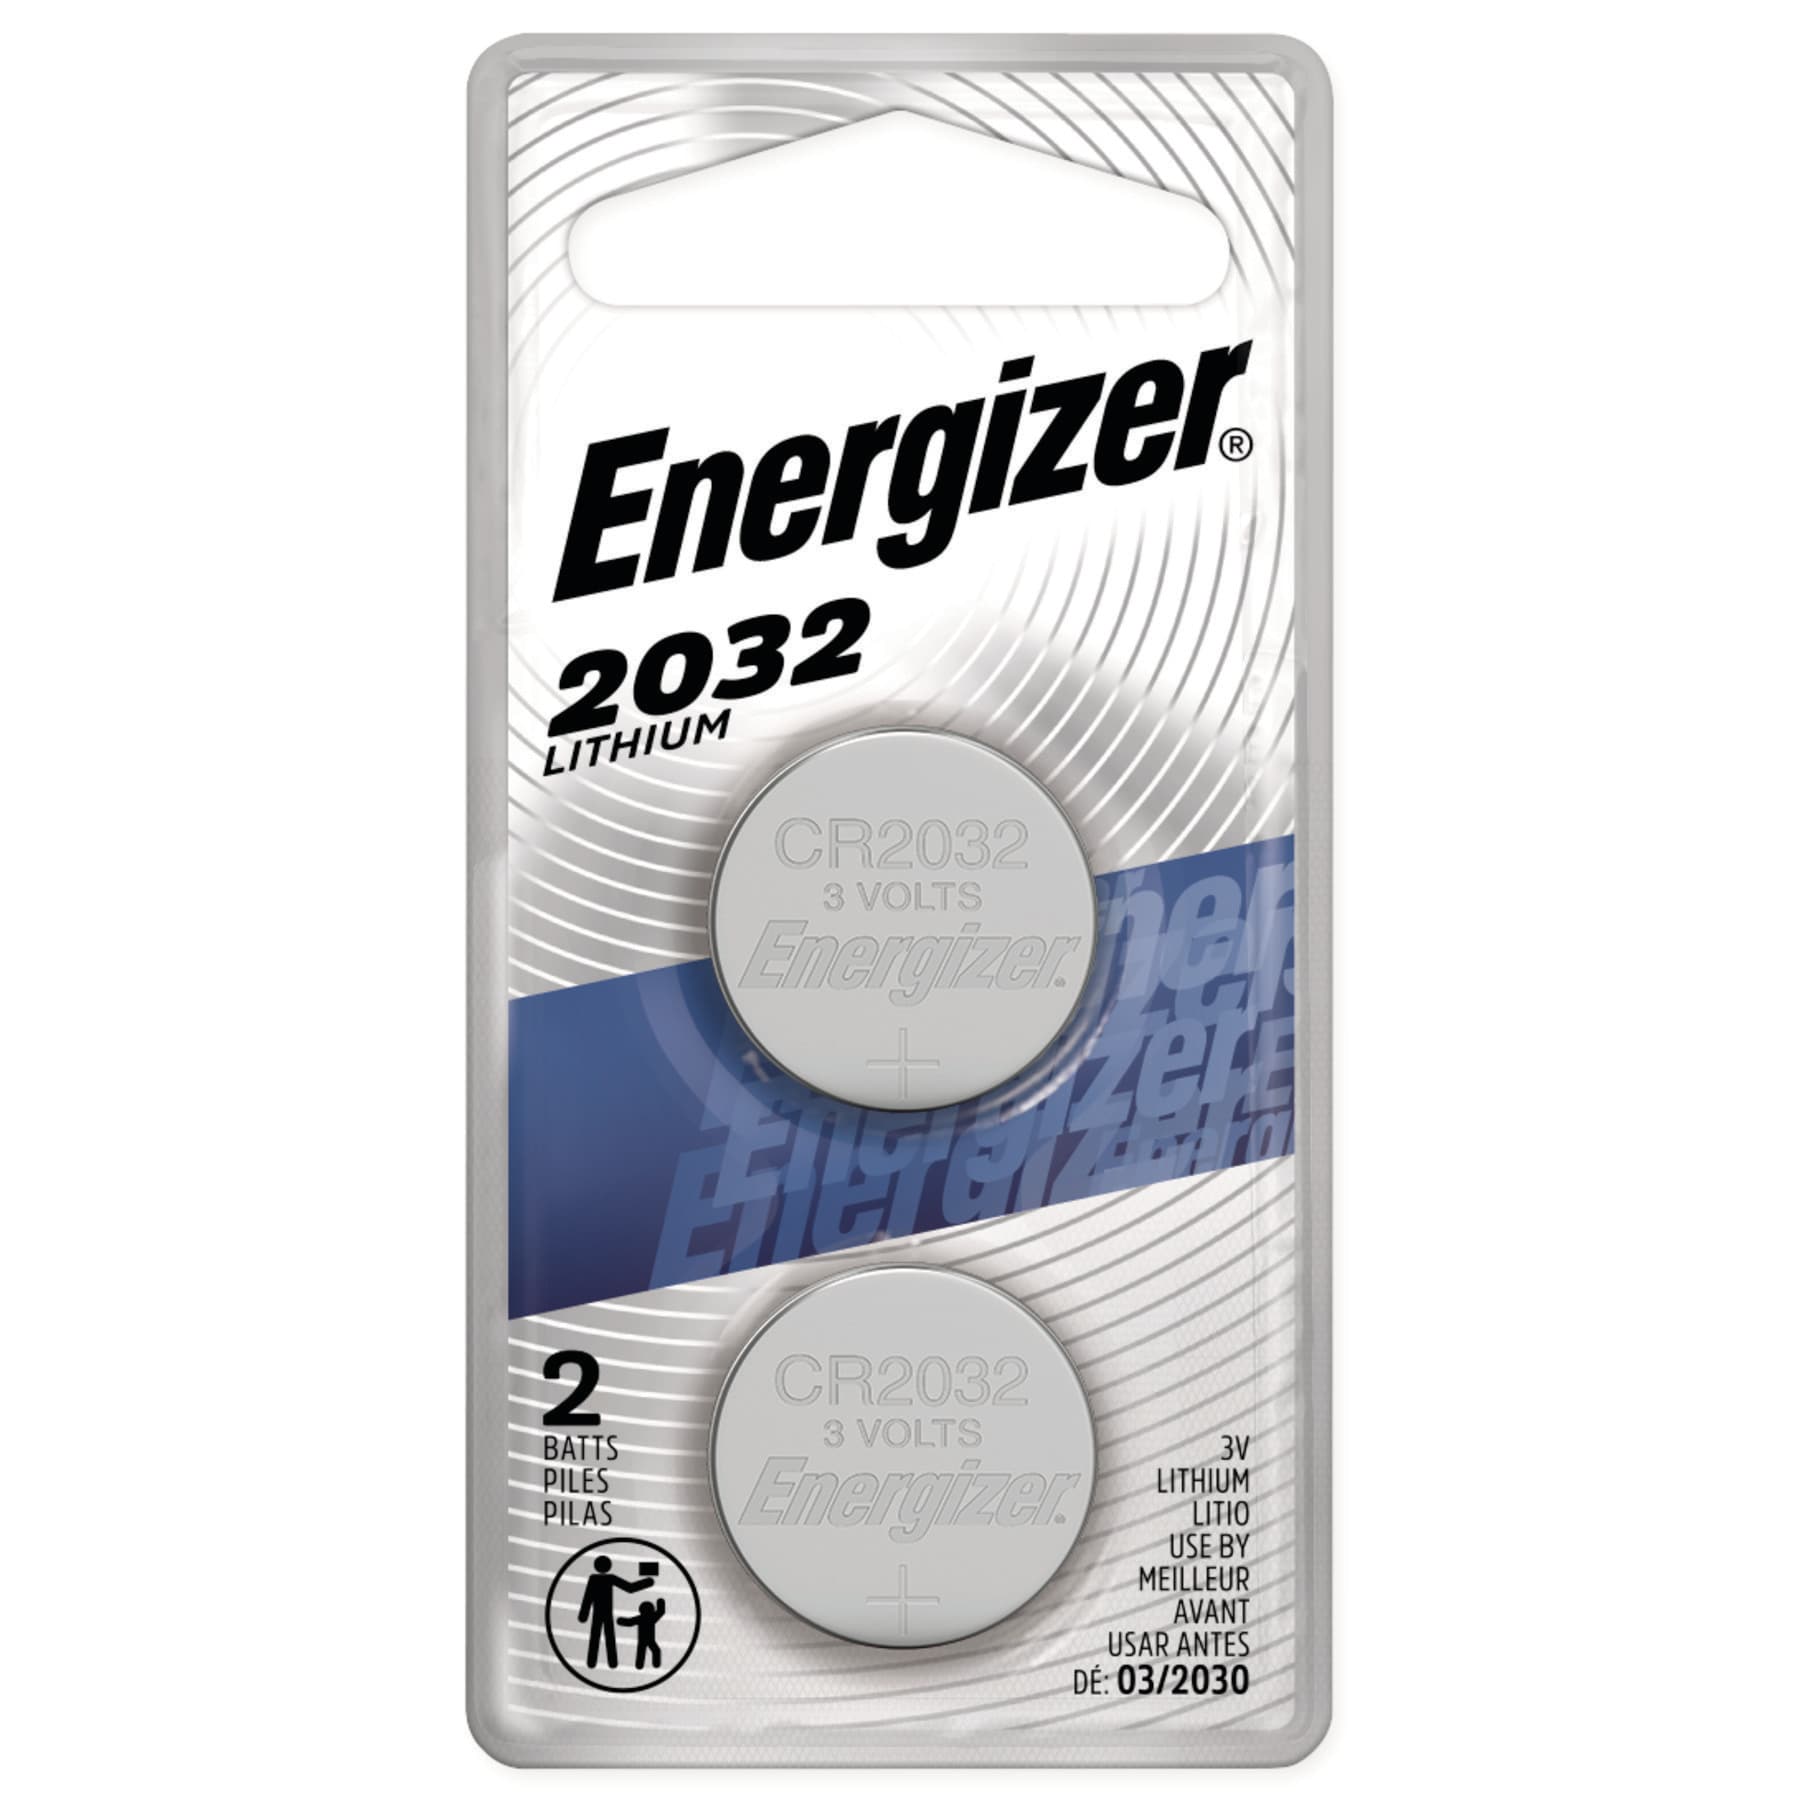 Onvervangbaar Integraal bevestig alstublieft Energizer Lithium Cr2032 Coin Batteries (2-Pack) in the Coin & Button  Batteries department at Lowes.com